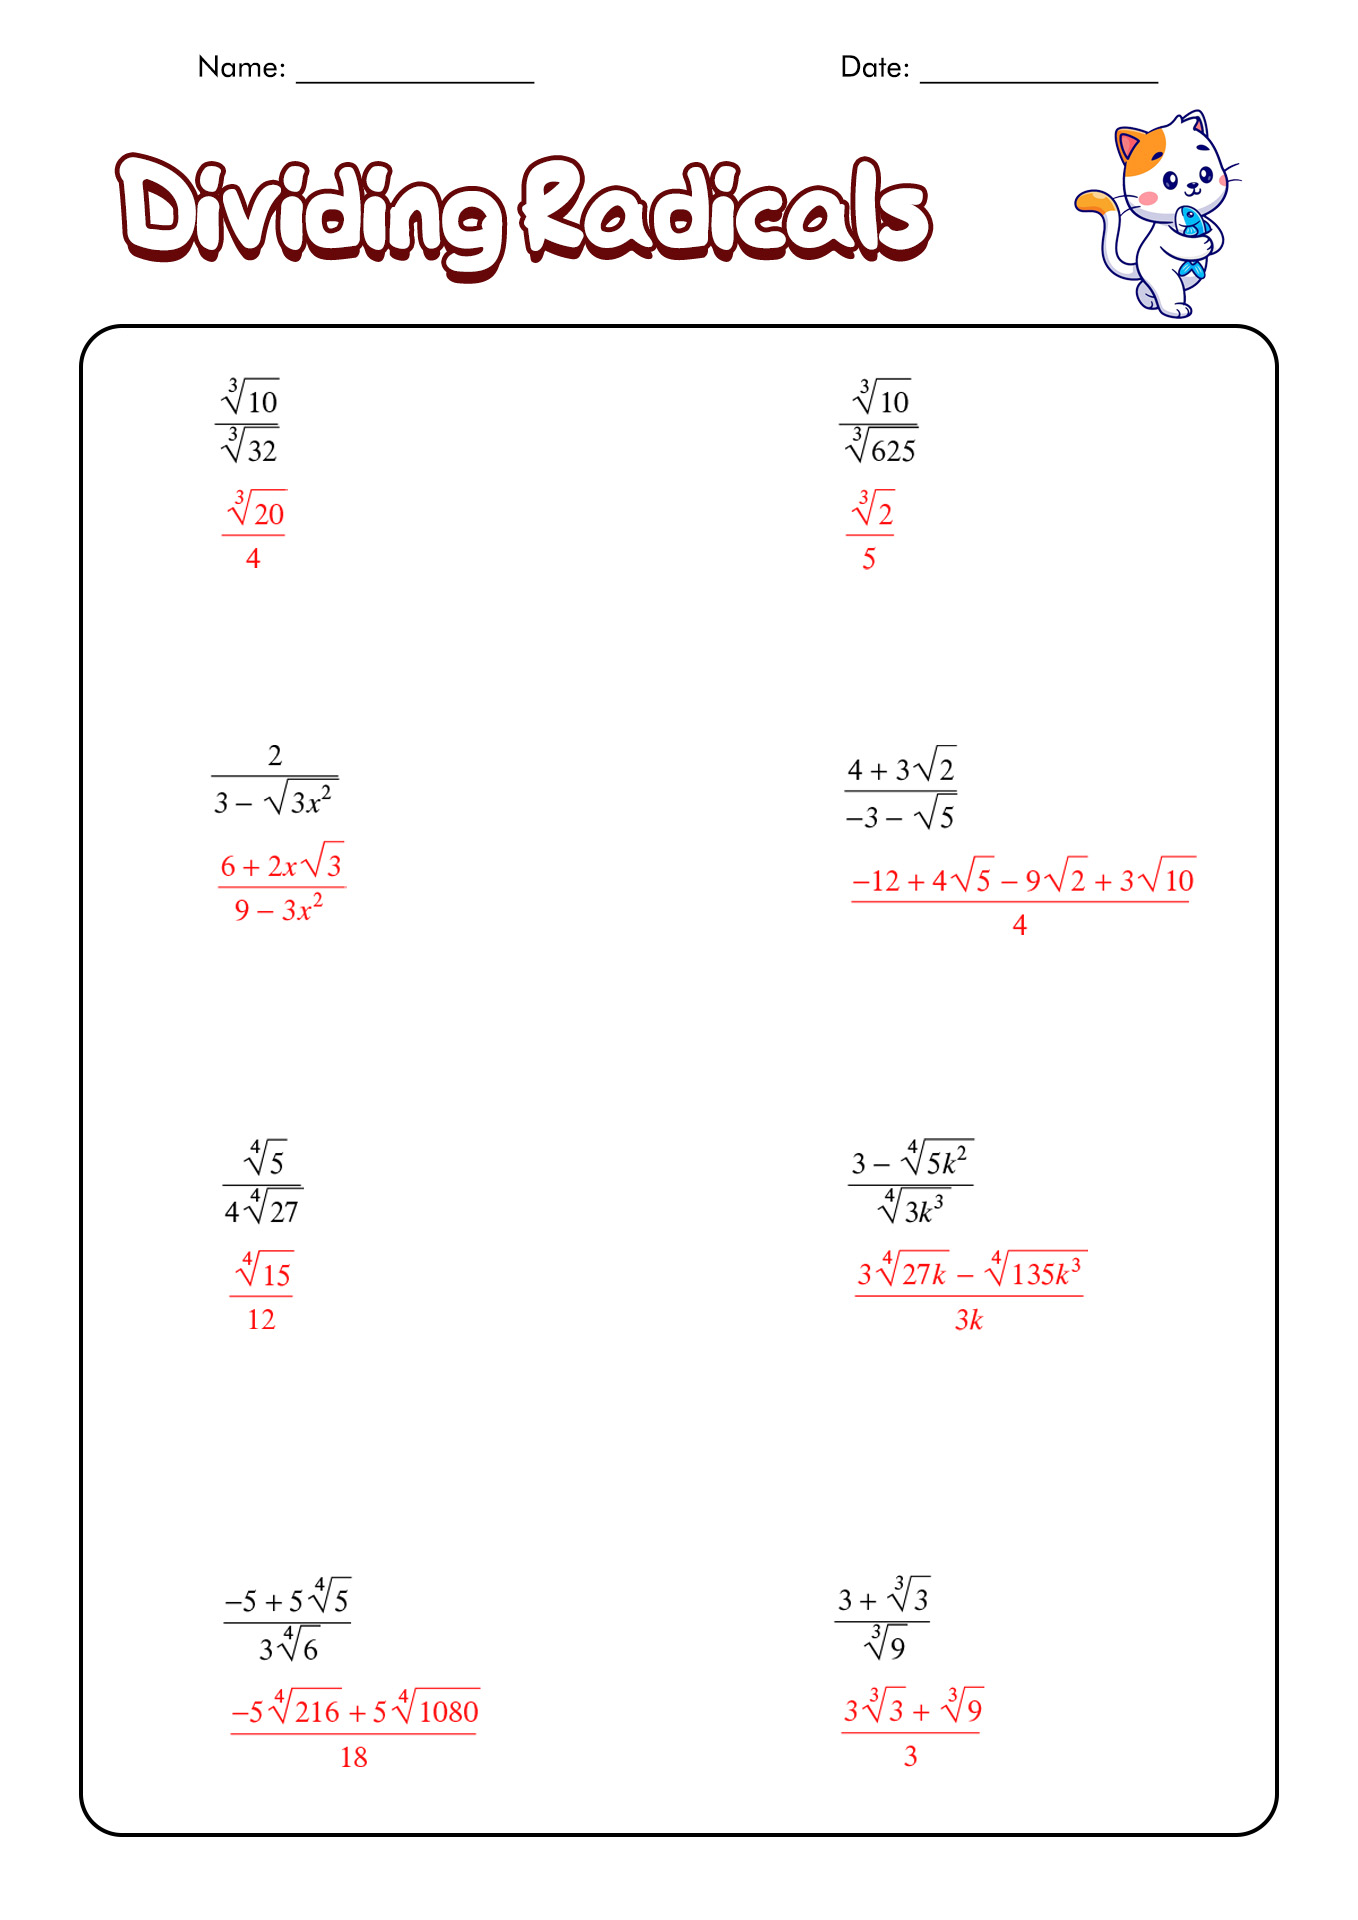 Dividing Radicals Kuta Software Infinite Algebra 2 Answers Image